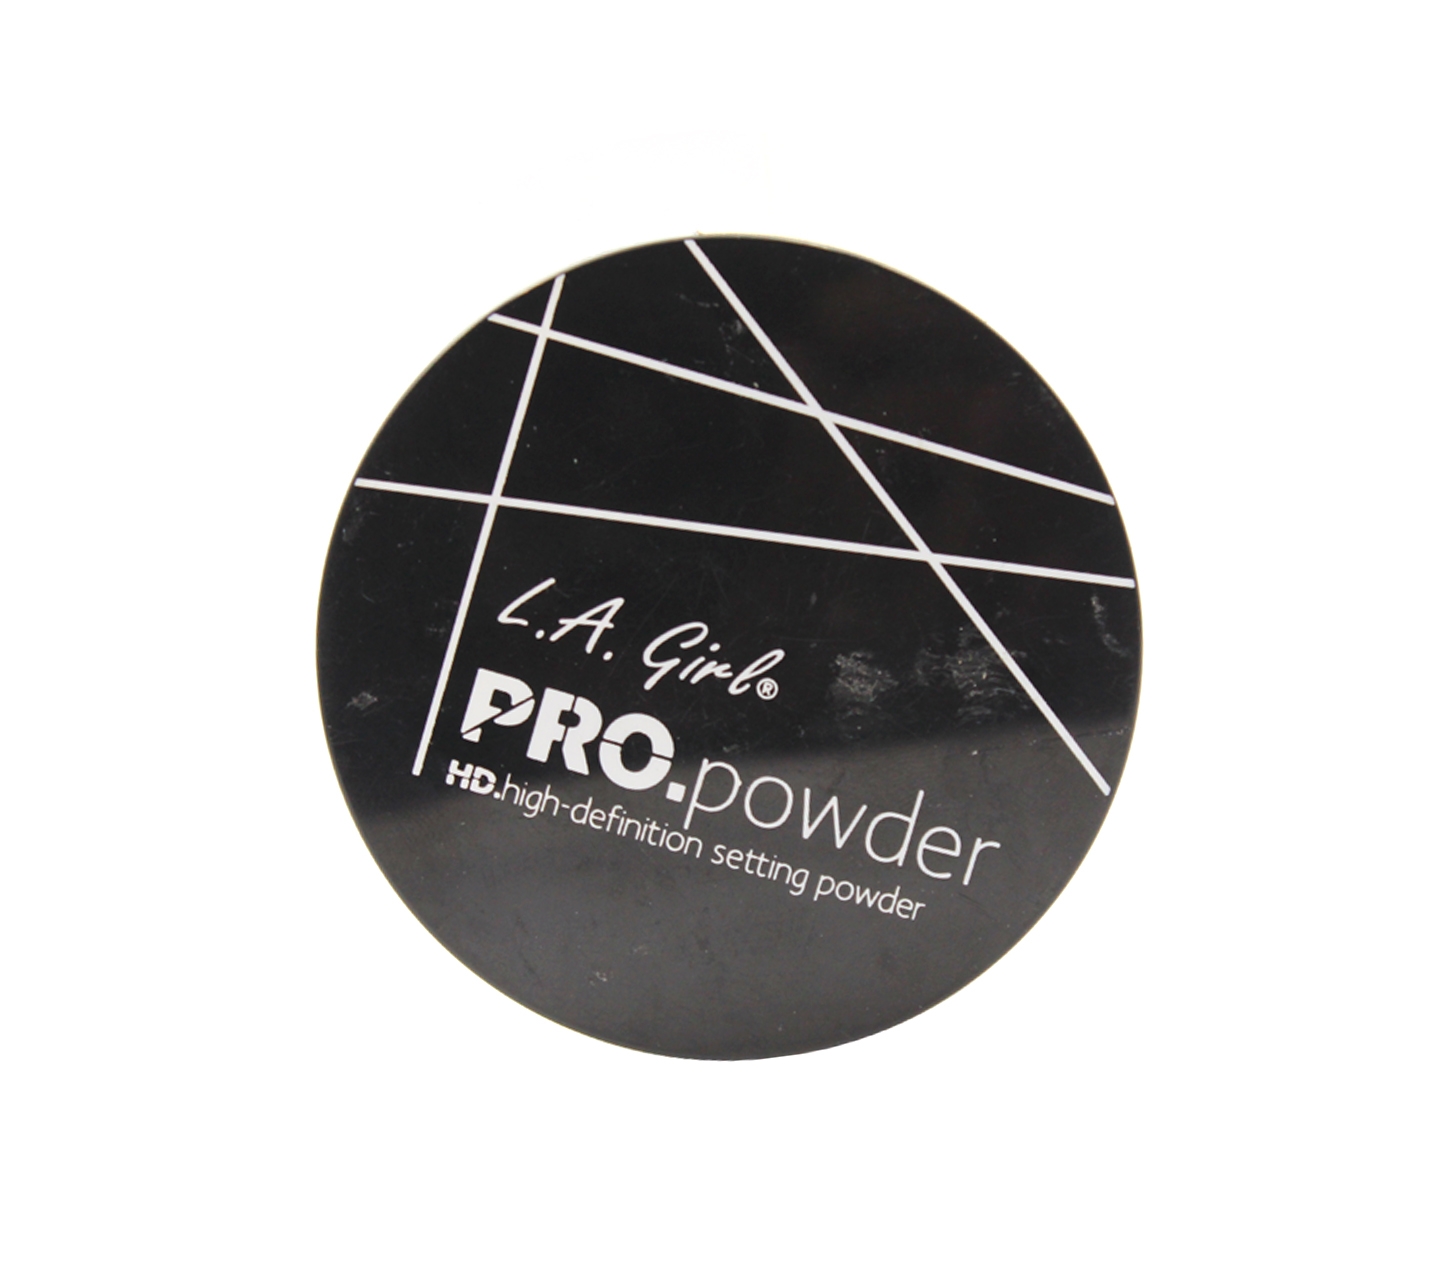 La Girl Pro Powder Setting Powder Translucent For All Skin Tones Faces